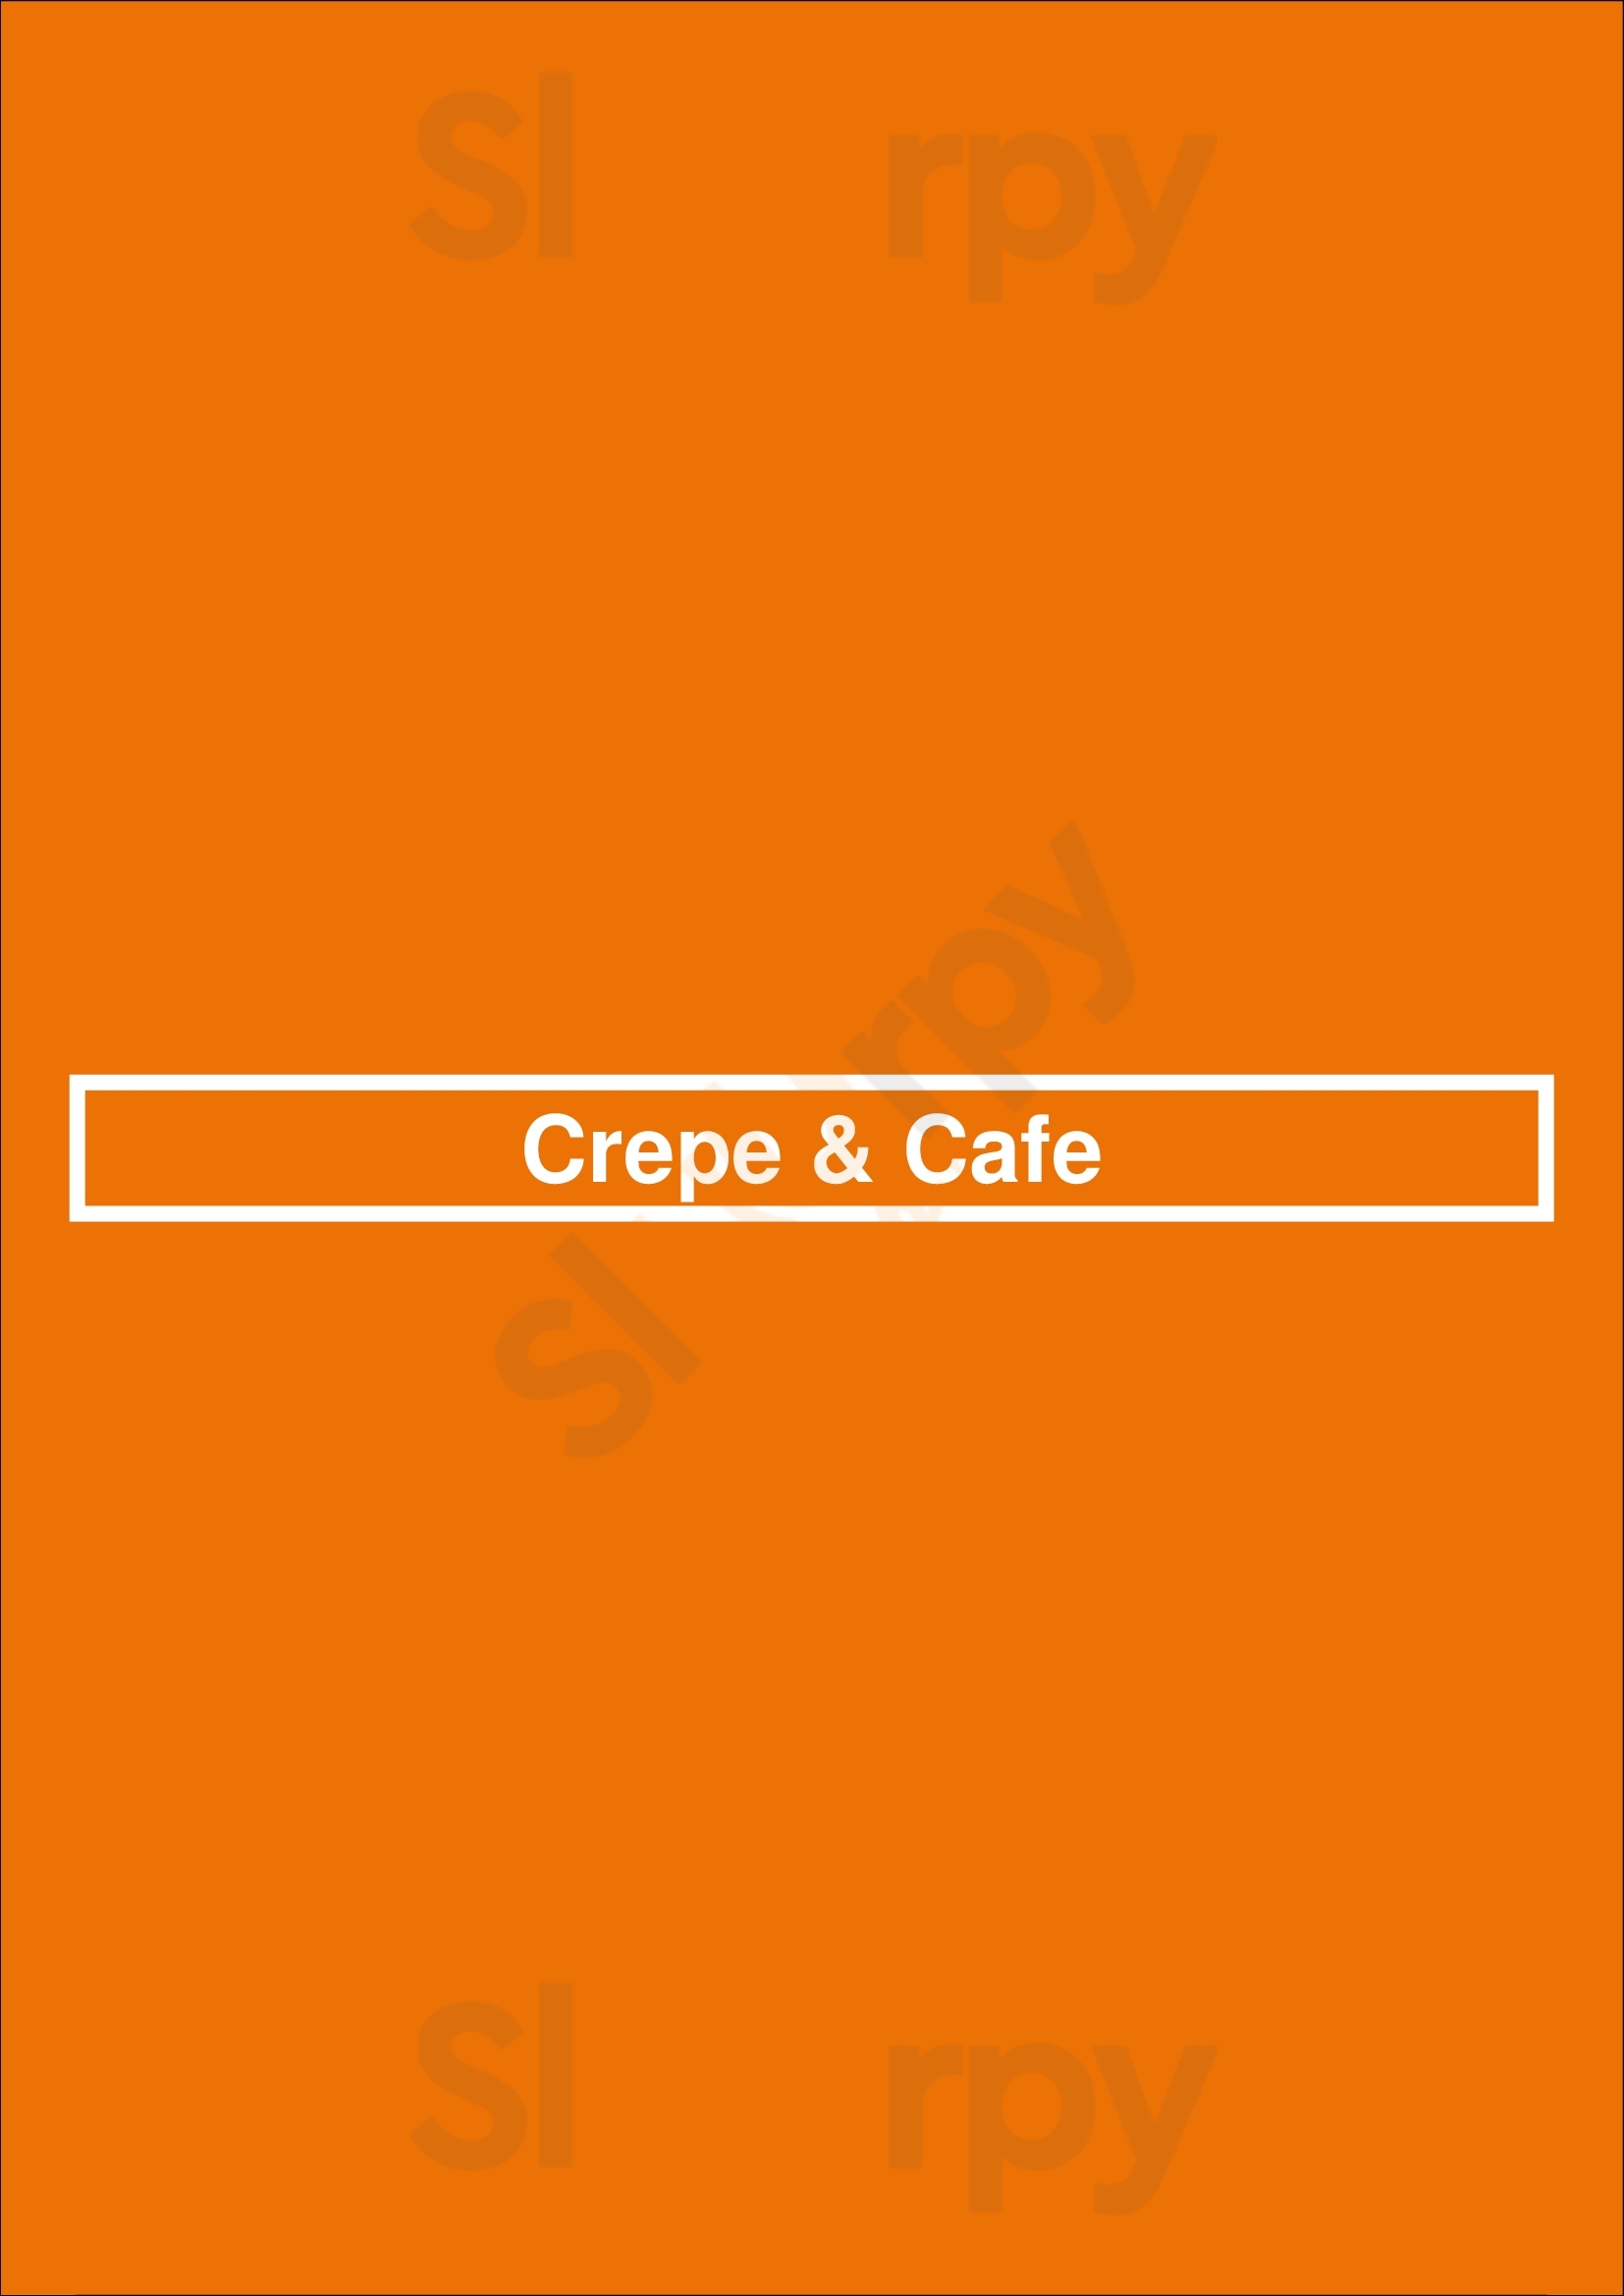 Crepe & Cafe Vancouver Menu - 1